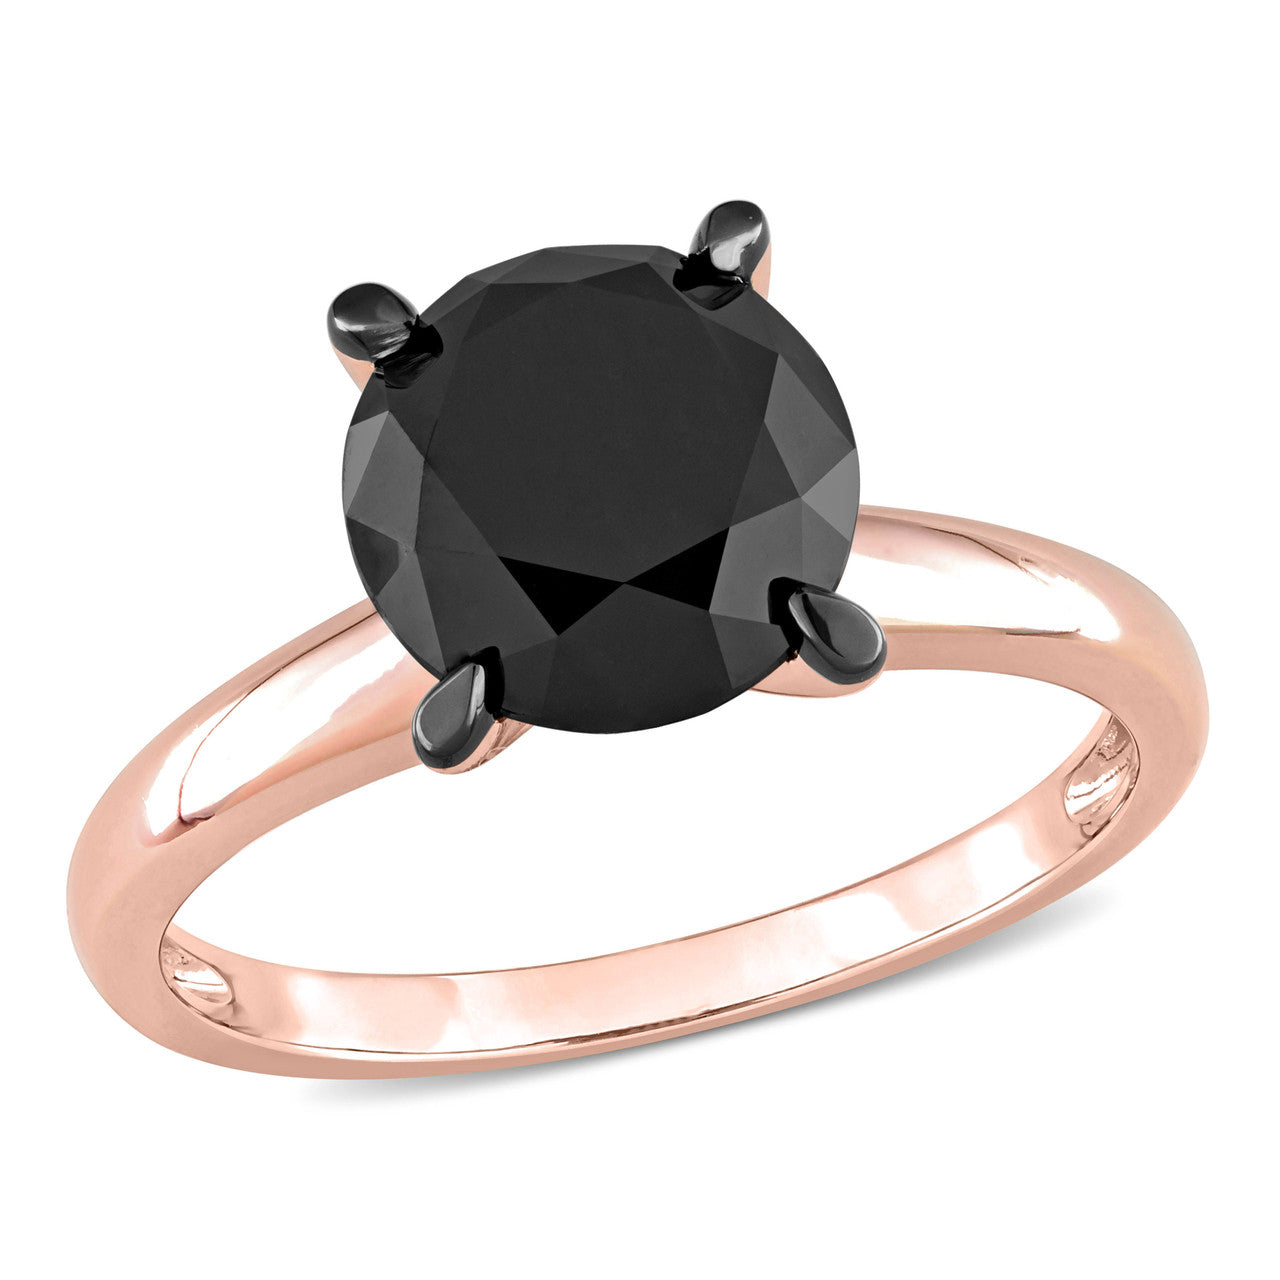 Ice Jewellery 3 CT Black Diamond Solitaire Ring in 14k Pink Gold w/ Black Rhodium Plated -  75000005566 | Ice Jewellery Australia